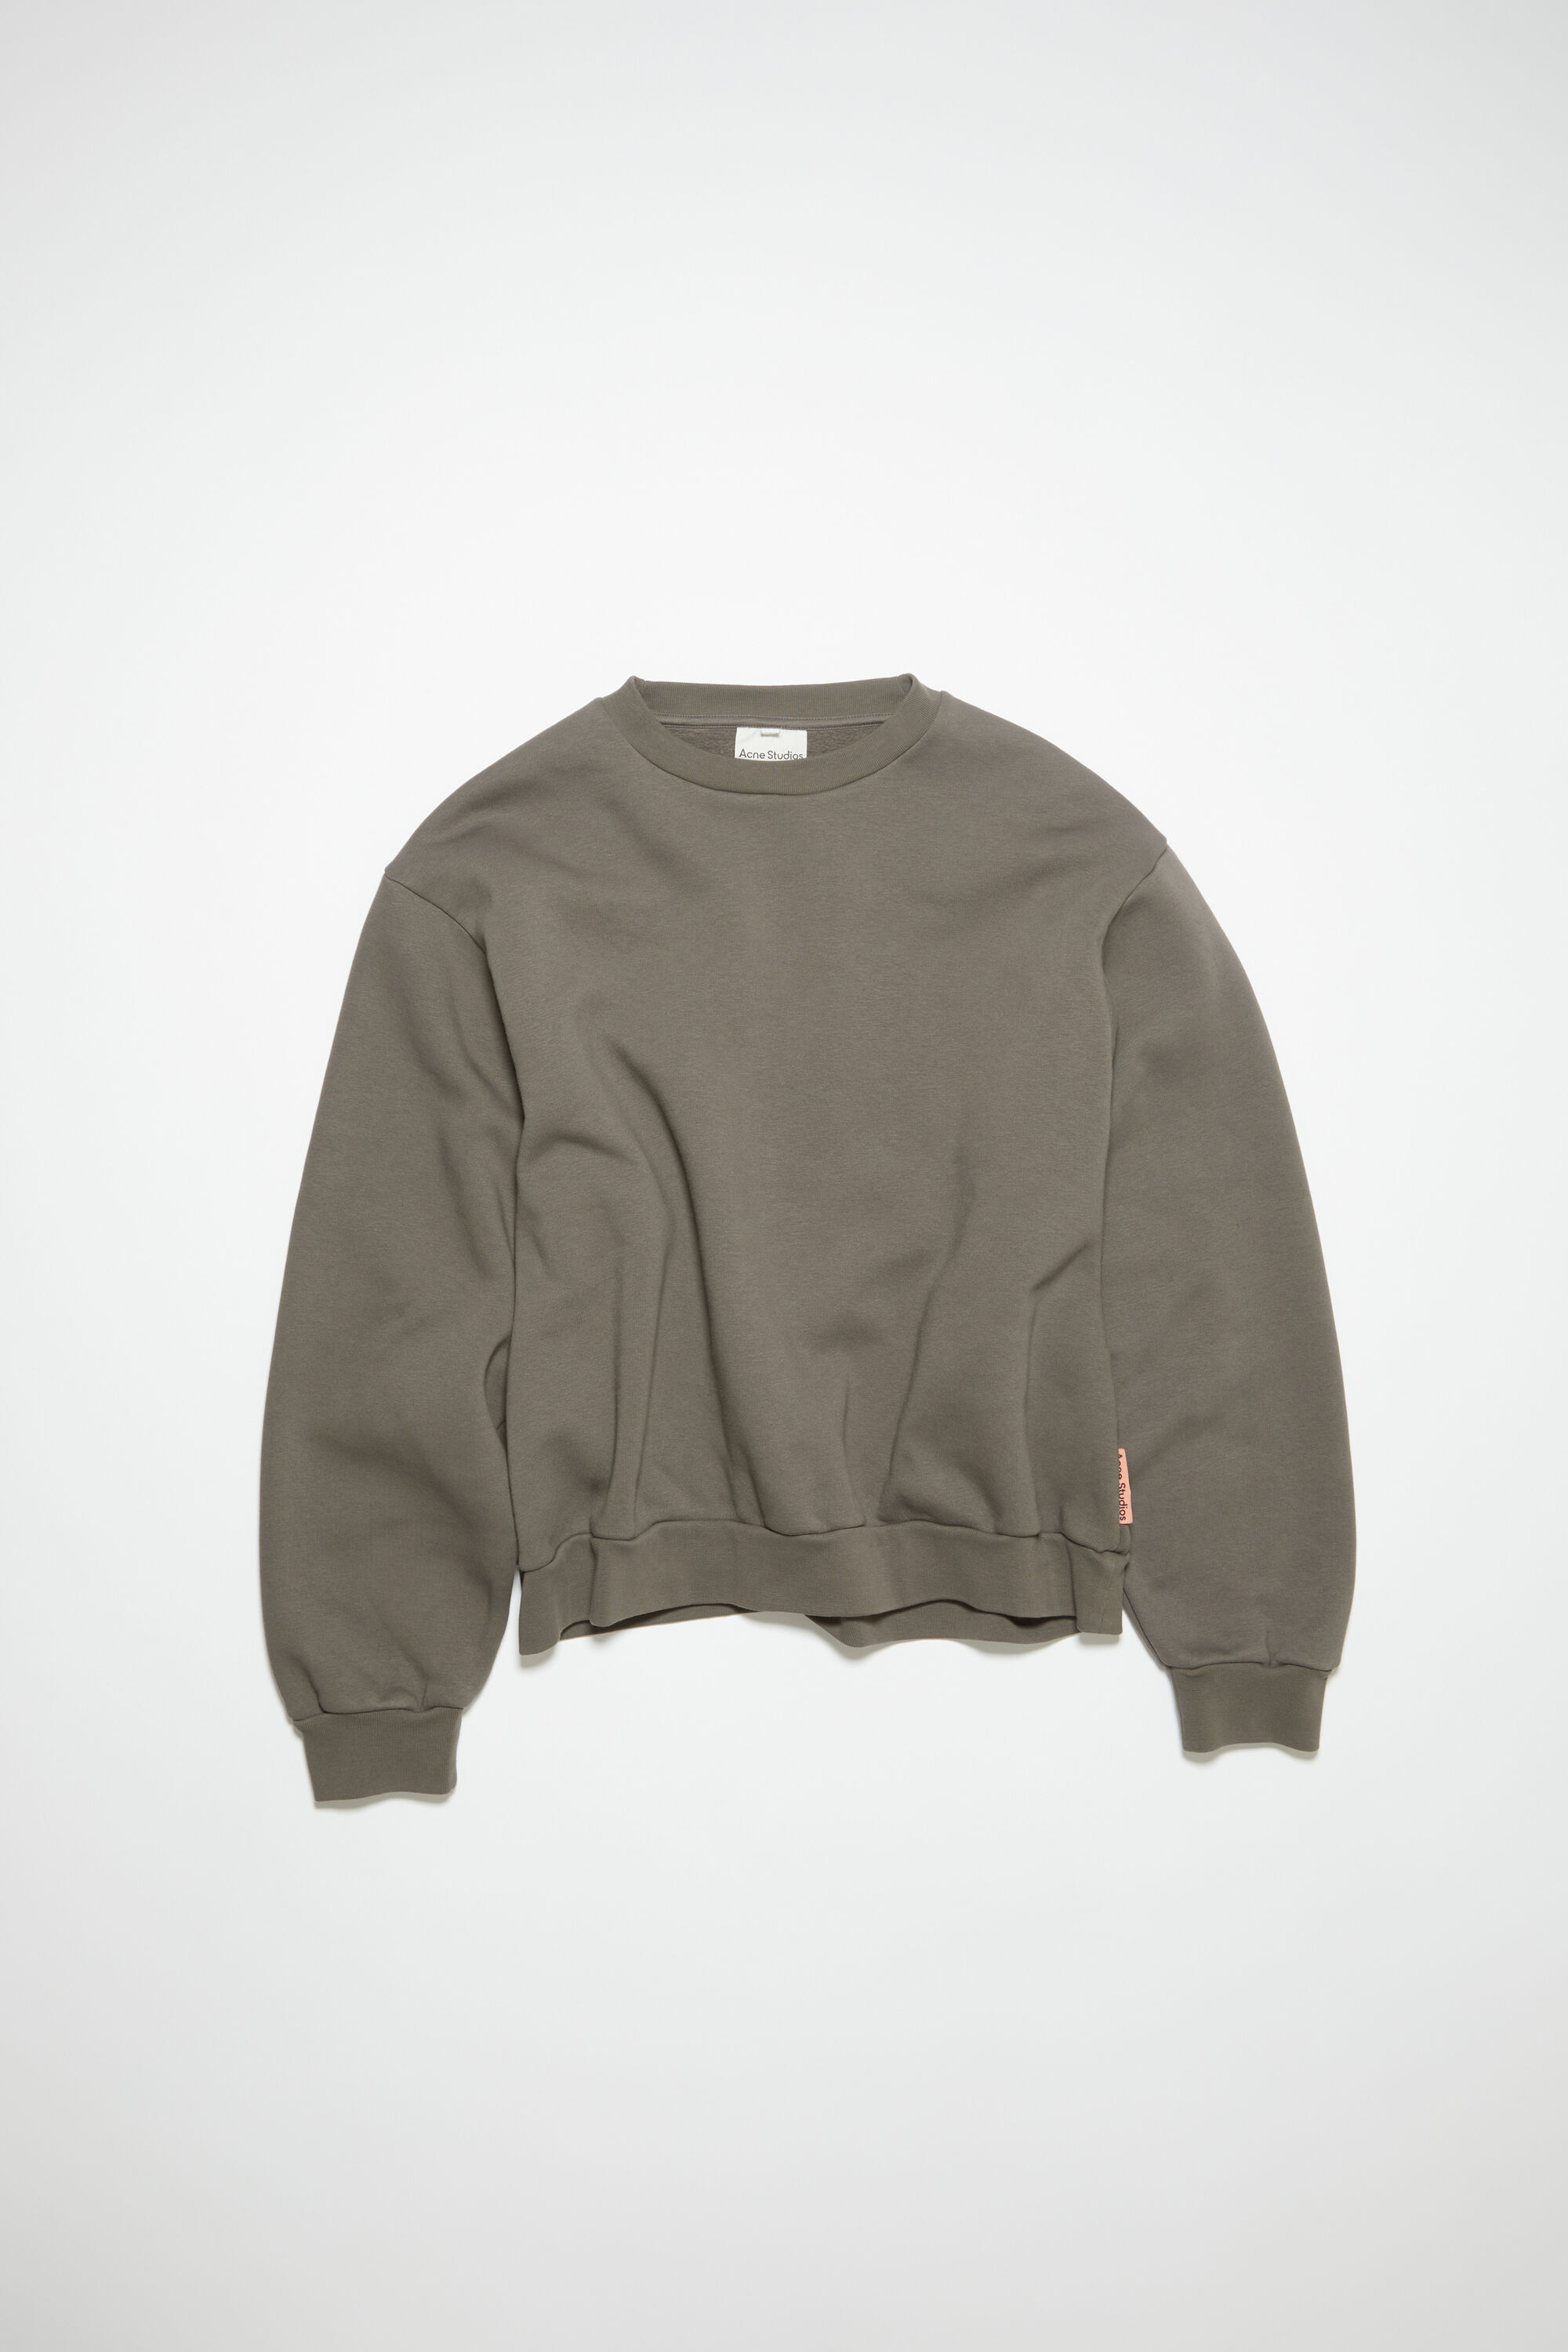 Acne Studios - Crew neck sweater - Mud grey